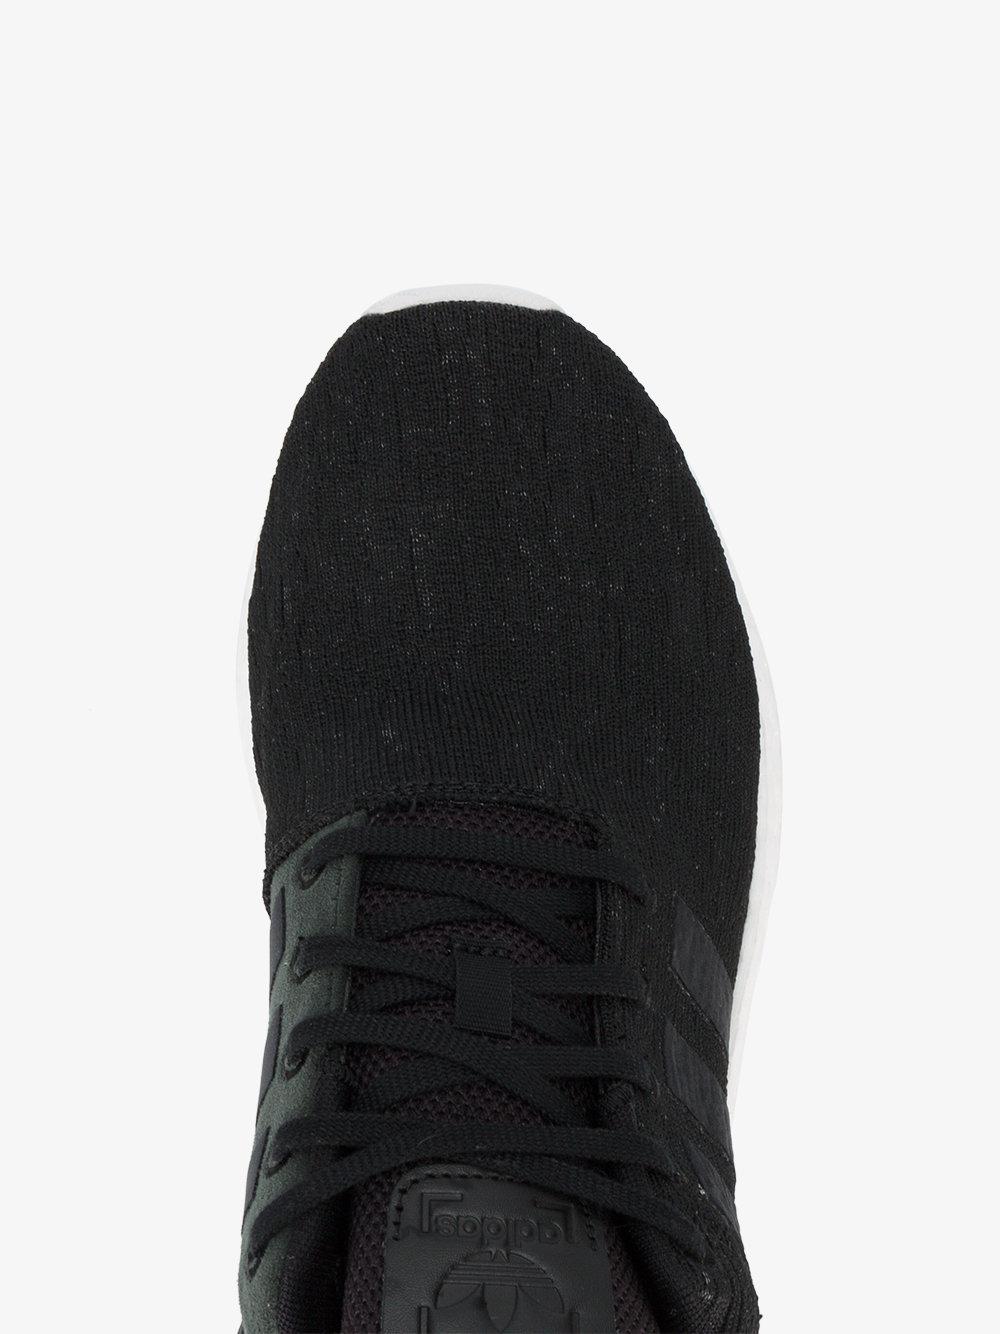 adidas originals nmd r2 trainers in black